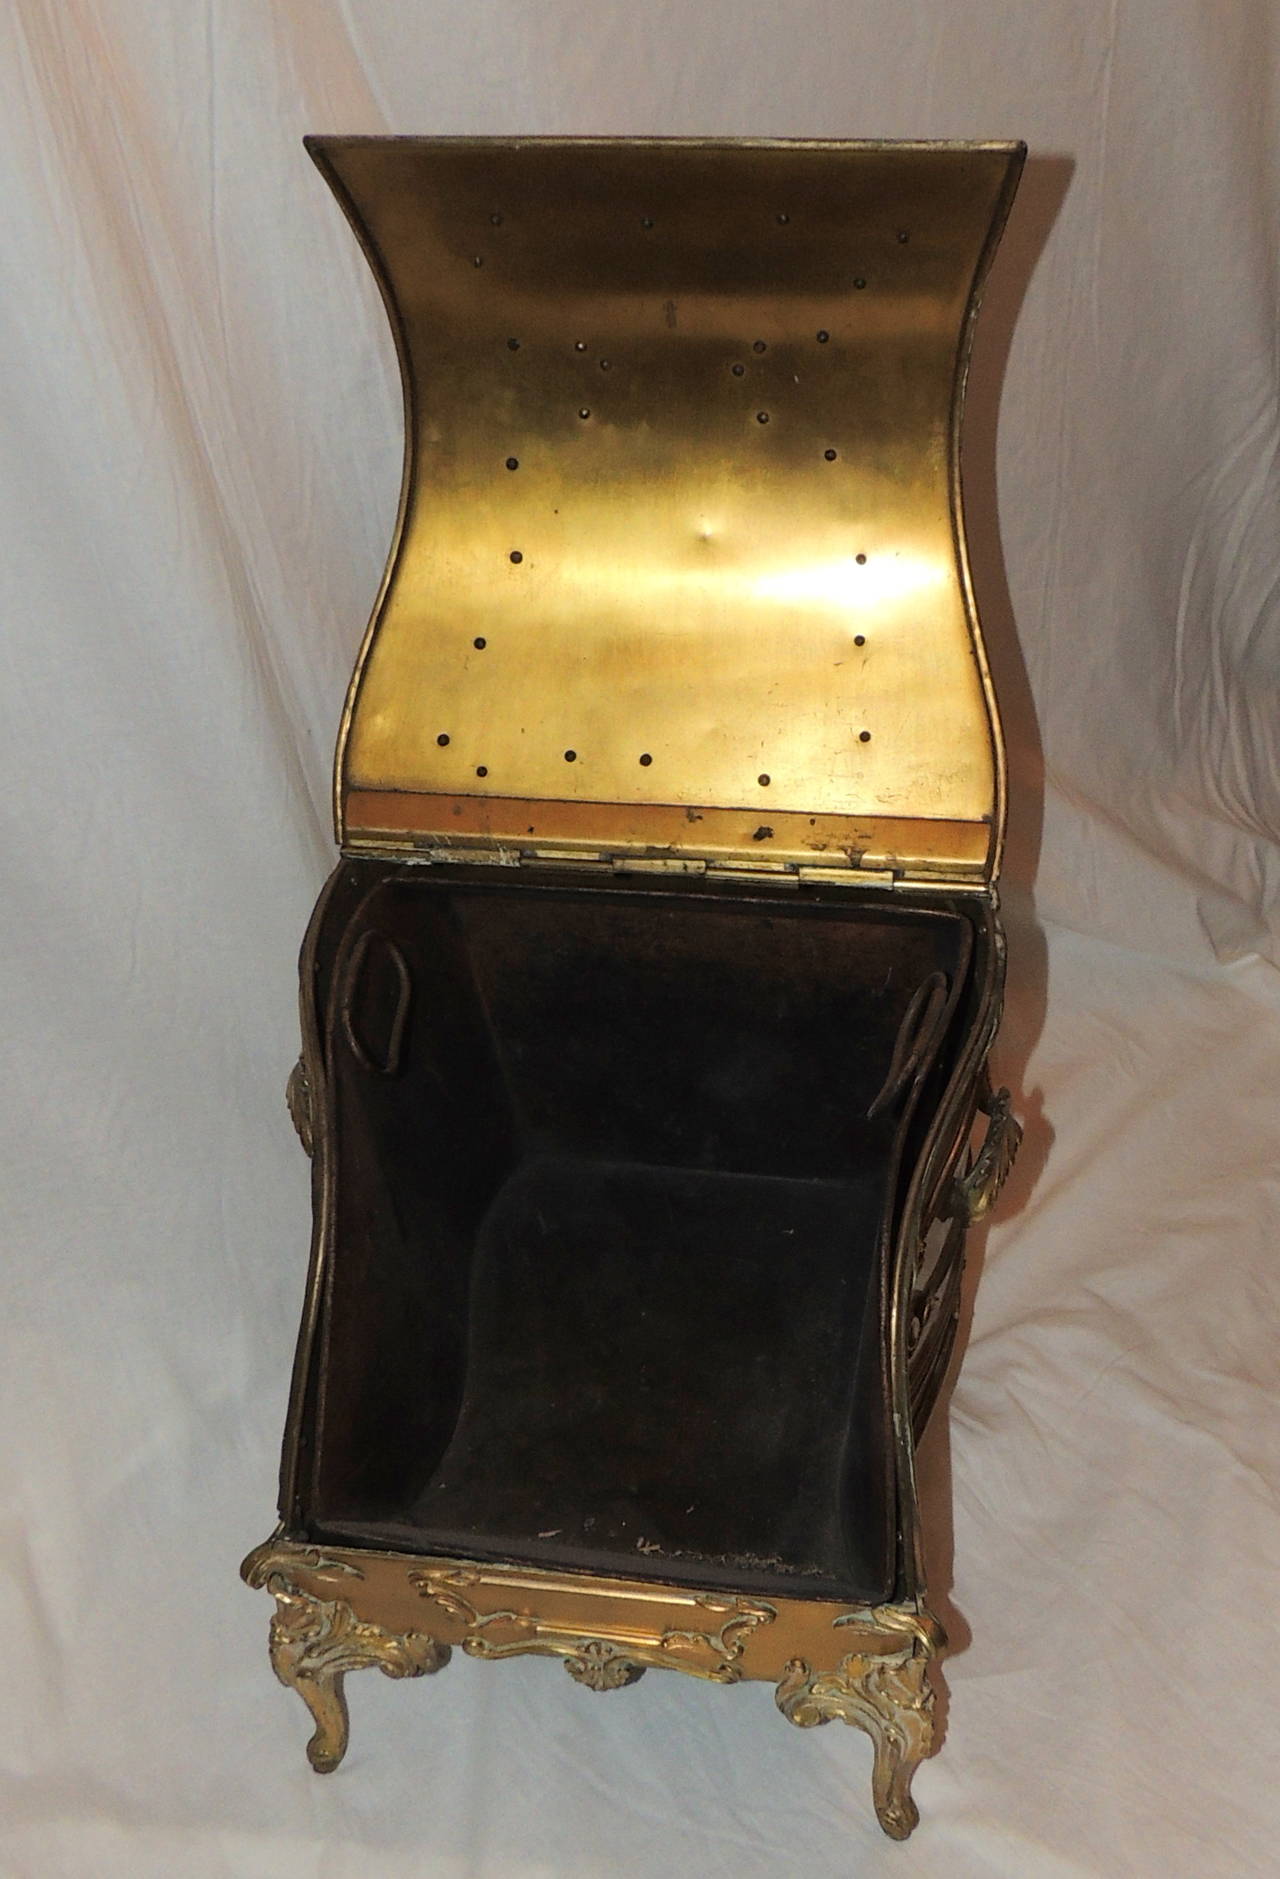 Belle Époque Wonderful French Bronze Brass Coal Scuttle Box with Original Insert and Shovel